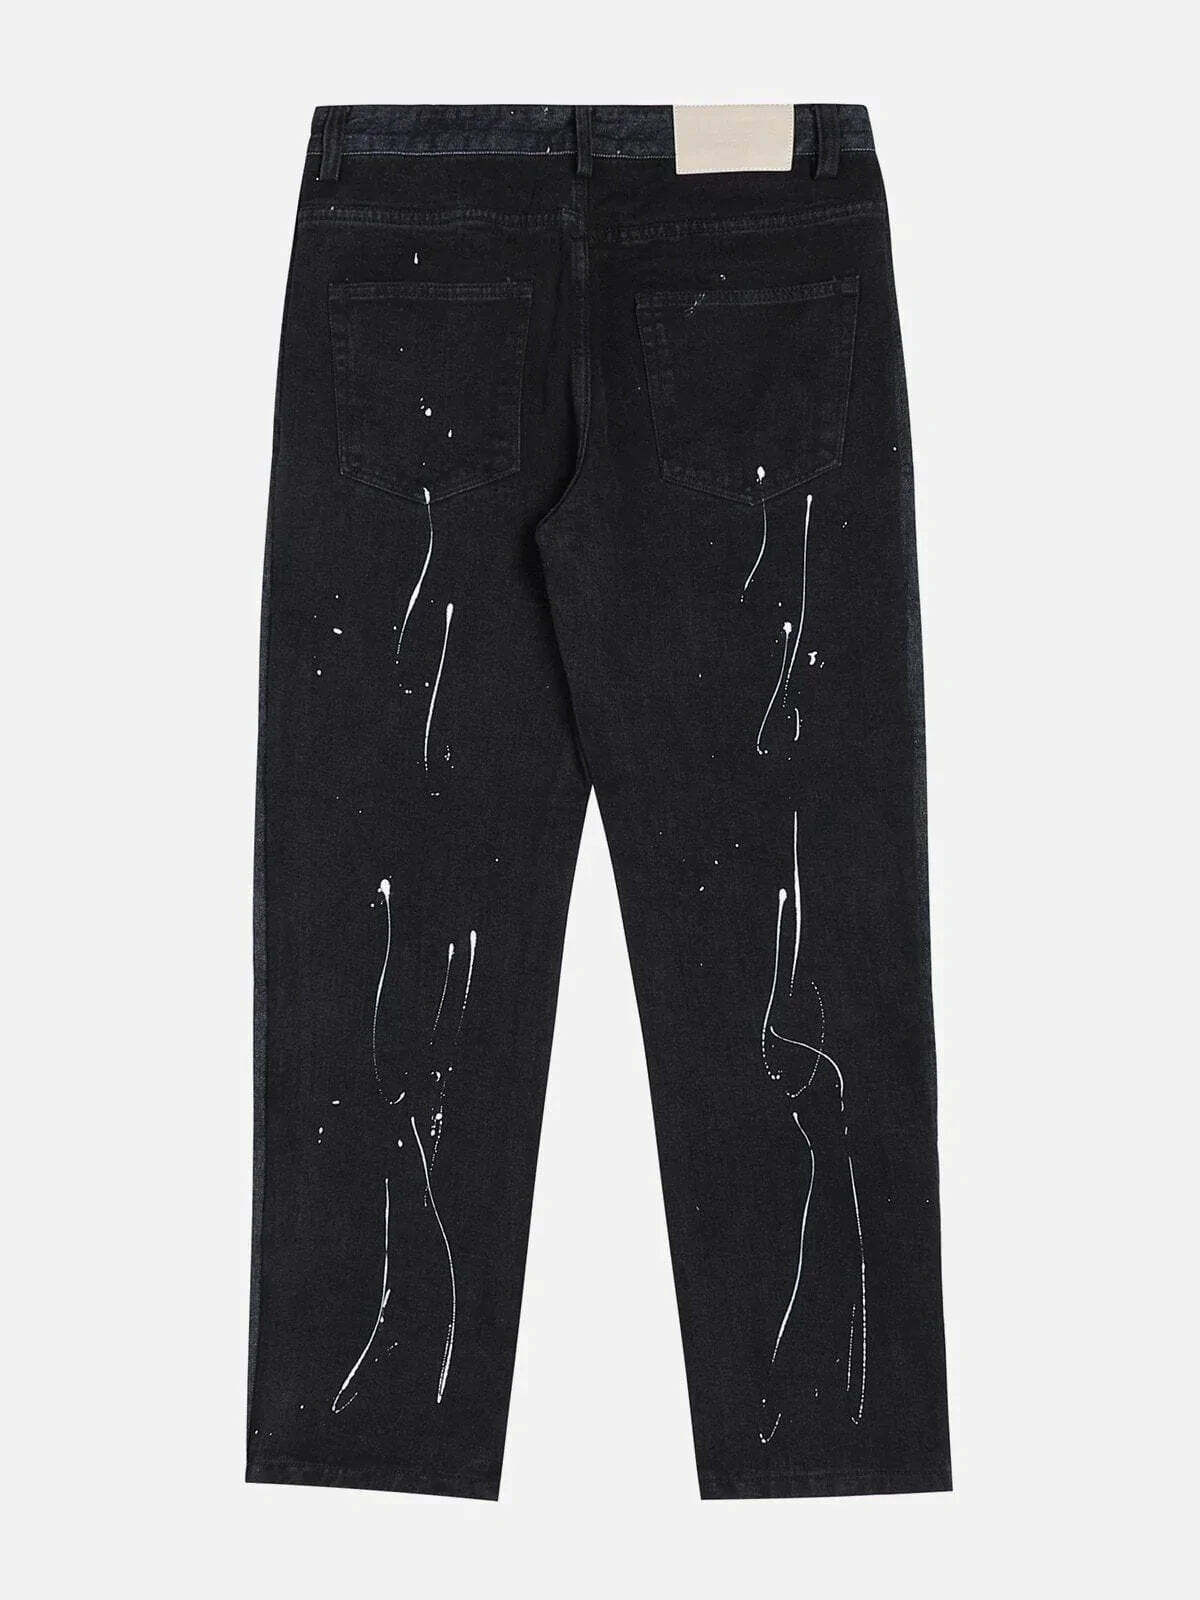 retro splash ink jeans edgy & vibrant streetwear 5099